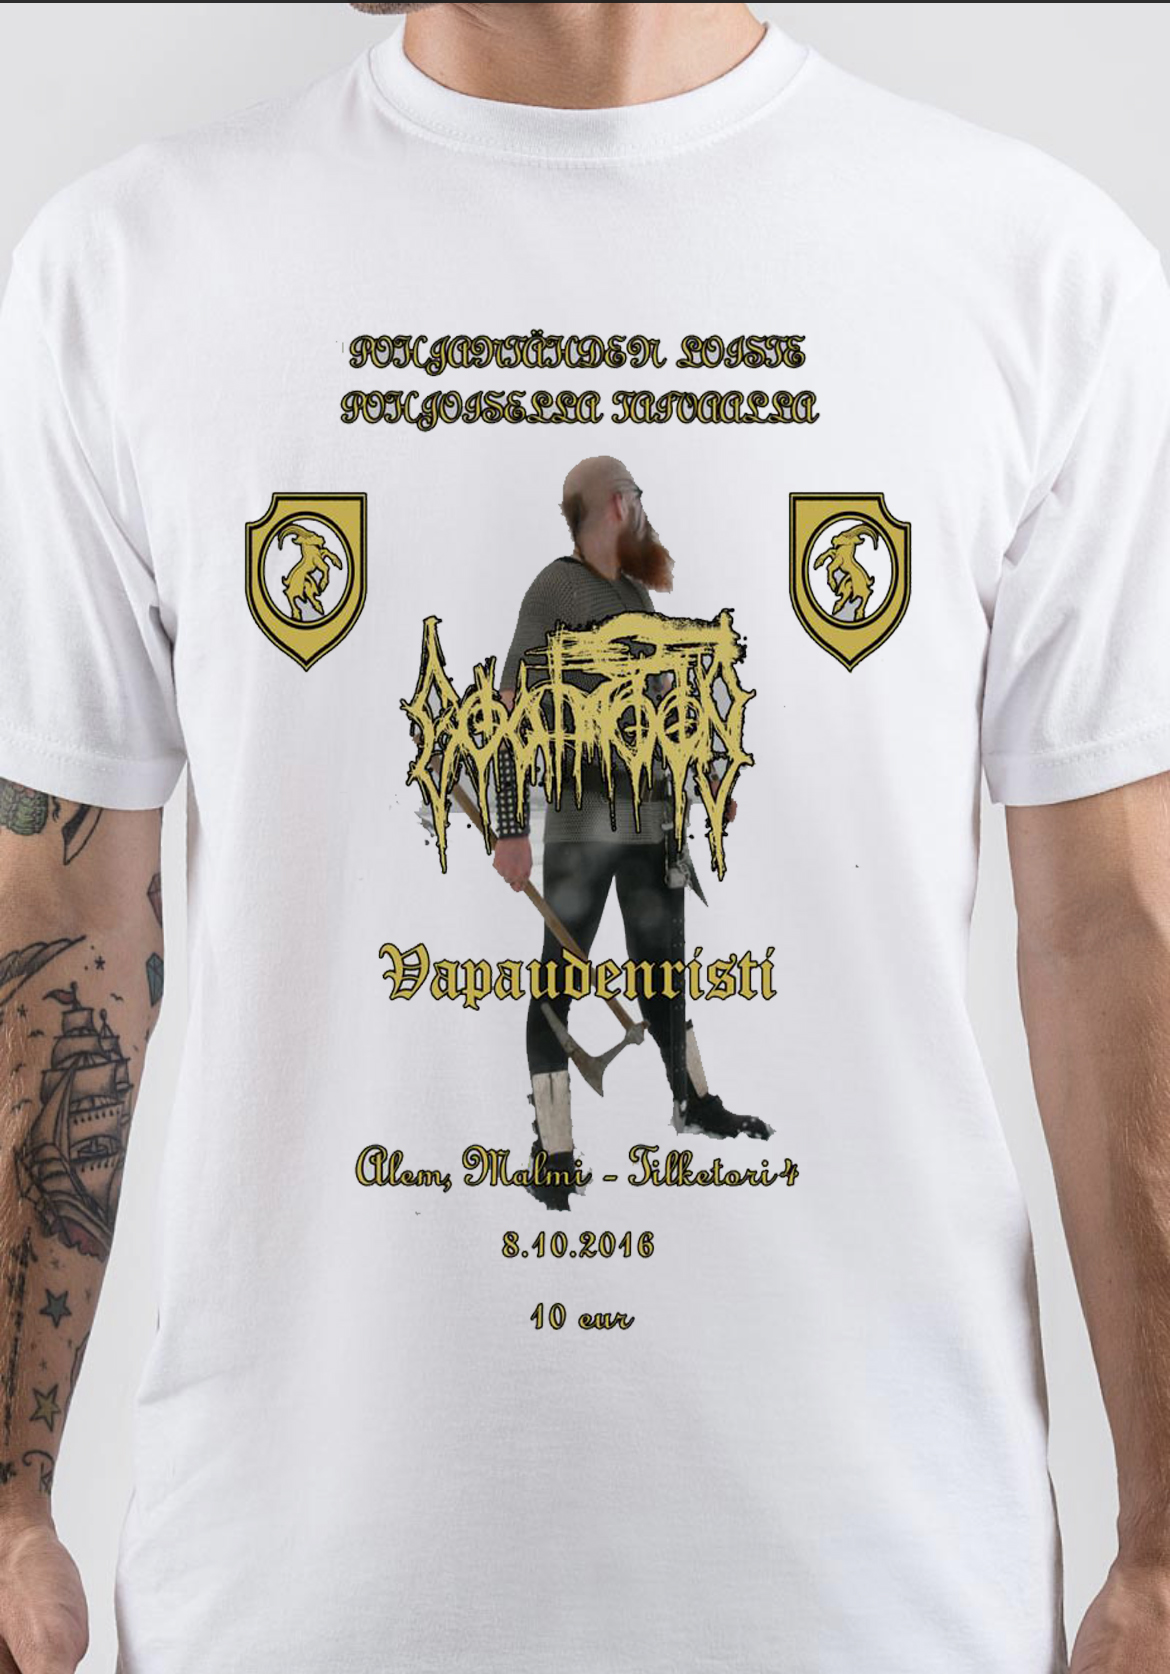 Goatmoon T-Shirt And Merchandise